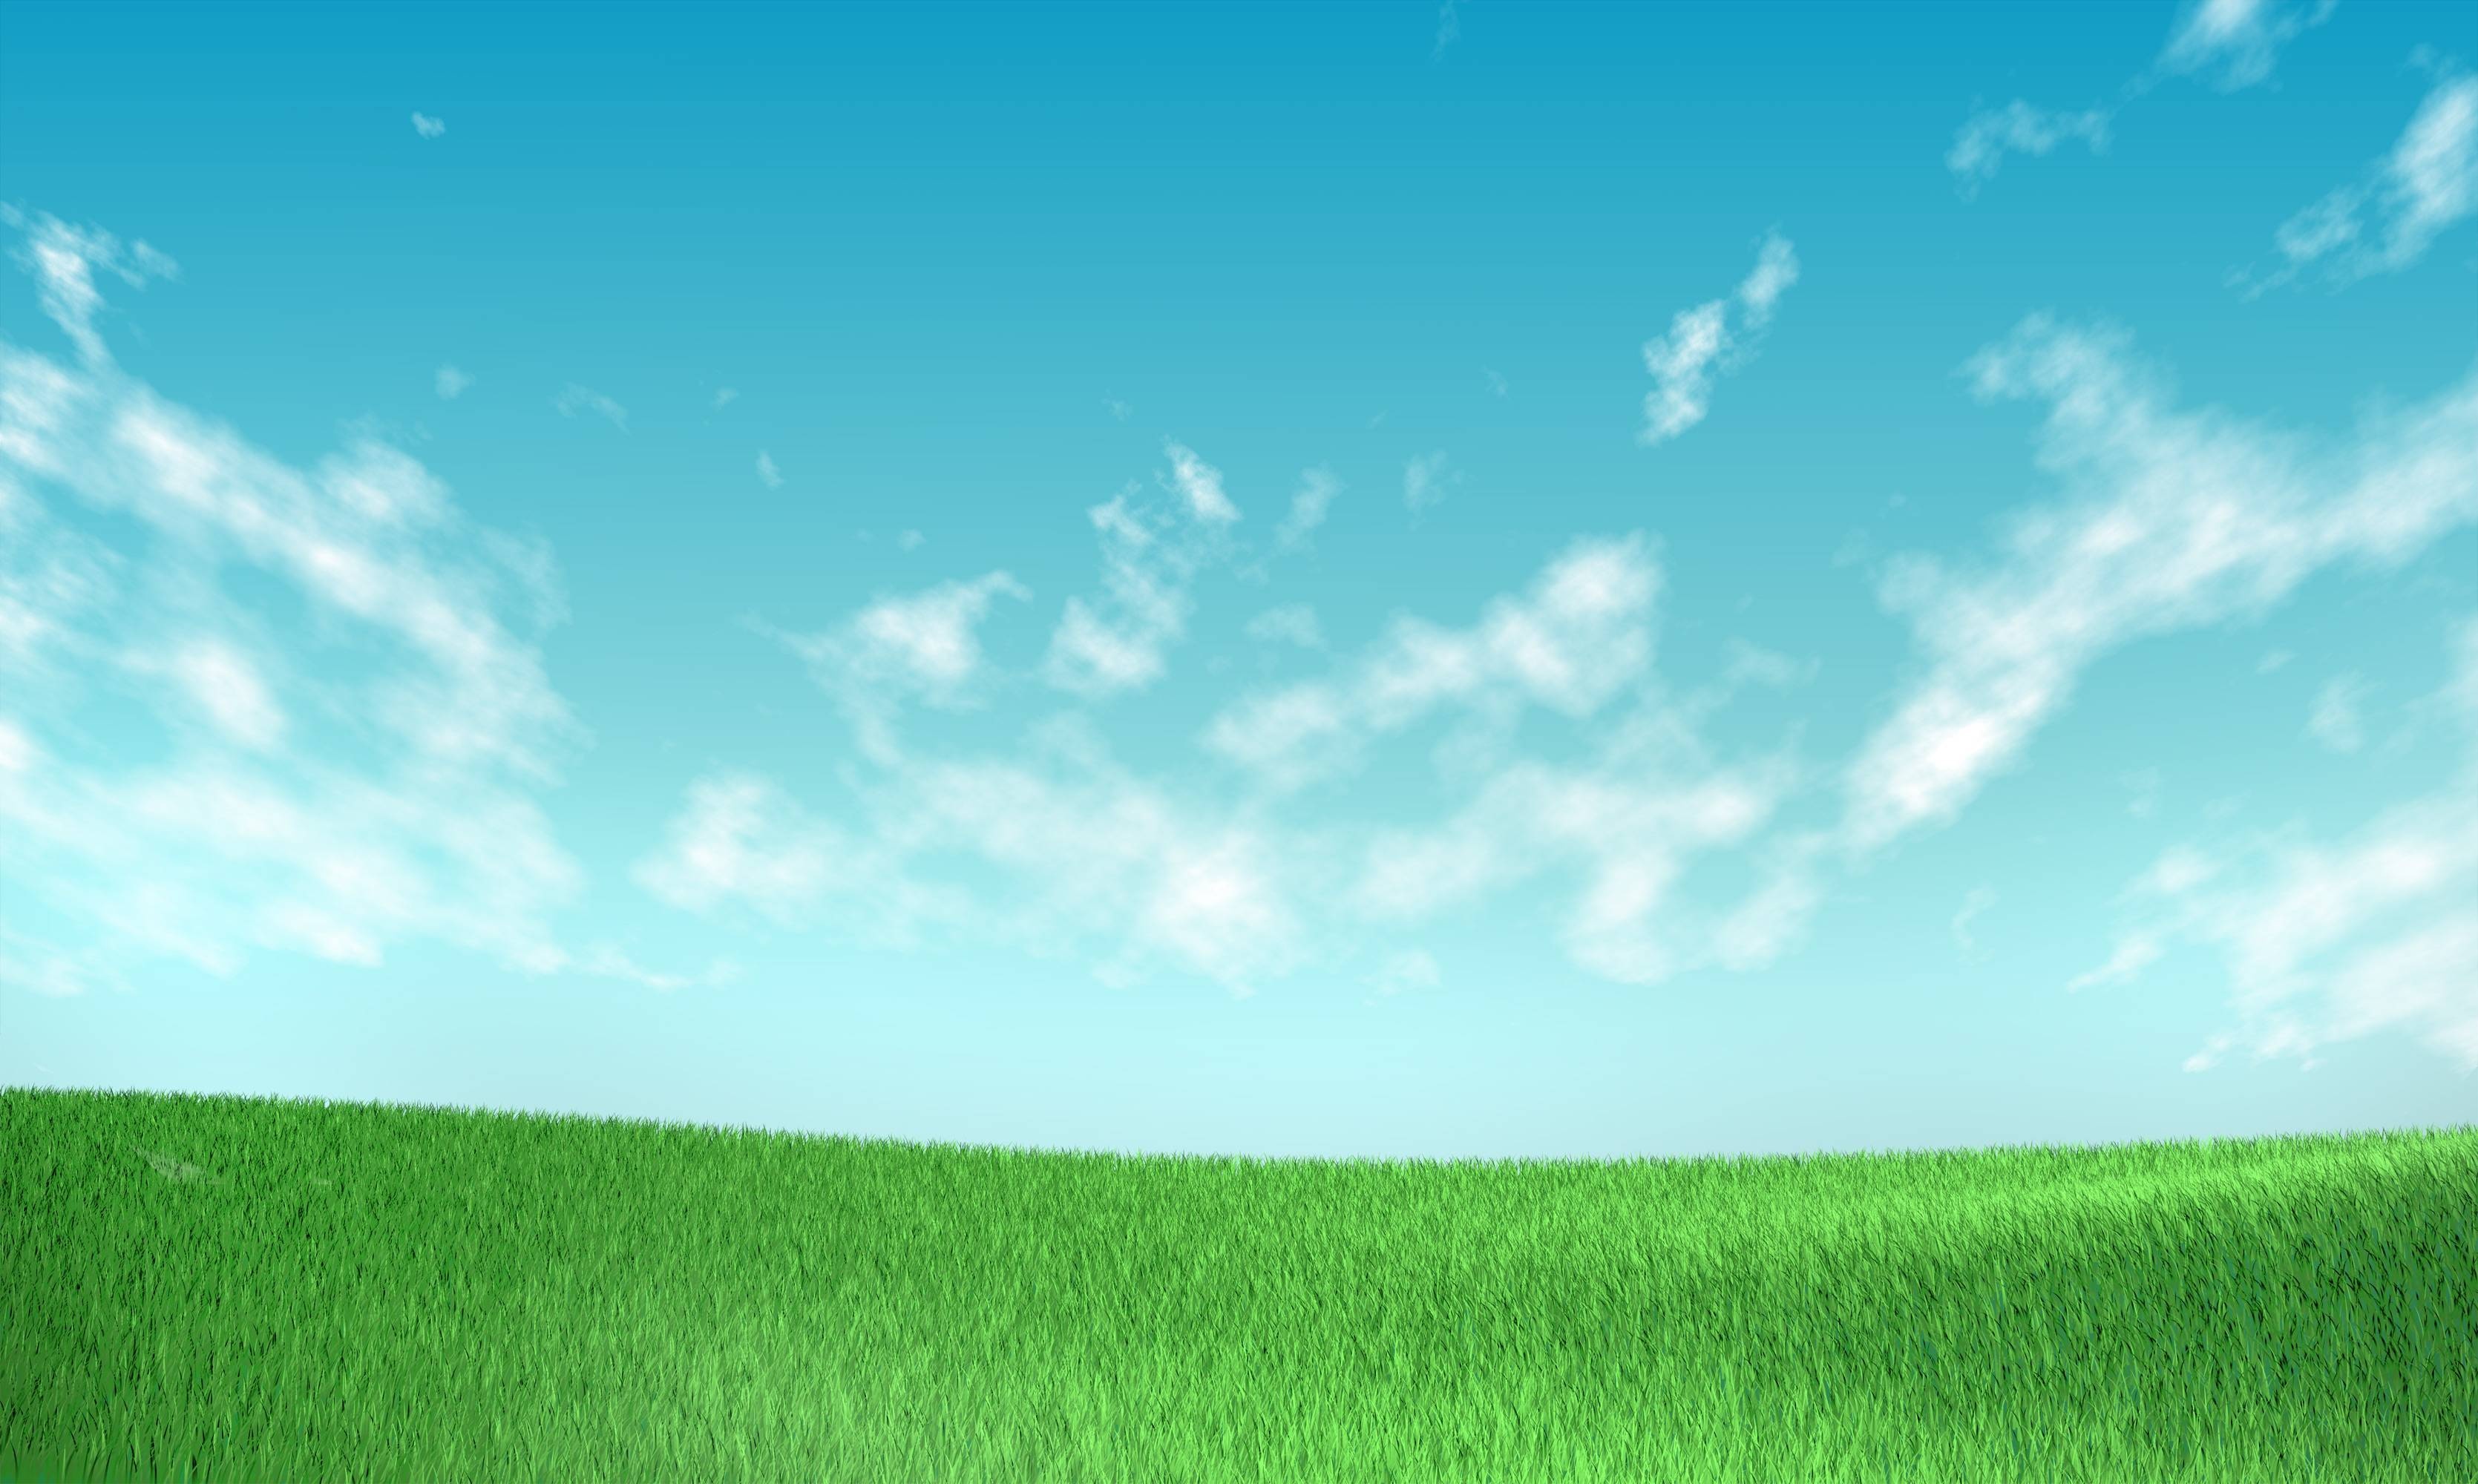 Grass and Sky: Bucolic surroundings, Natural environment, Fresh air, Green earth, Plain. 3340x2000 HD Wallpaper.